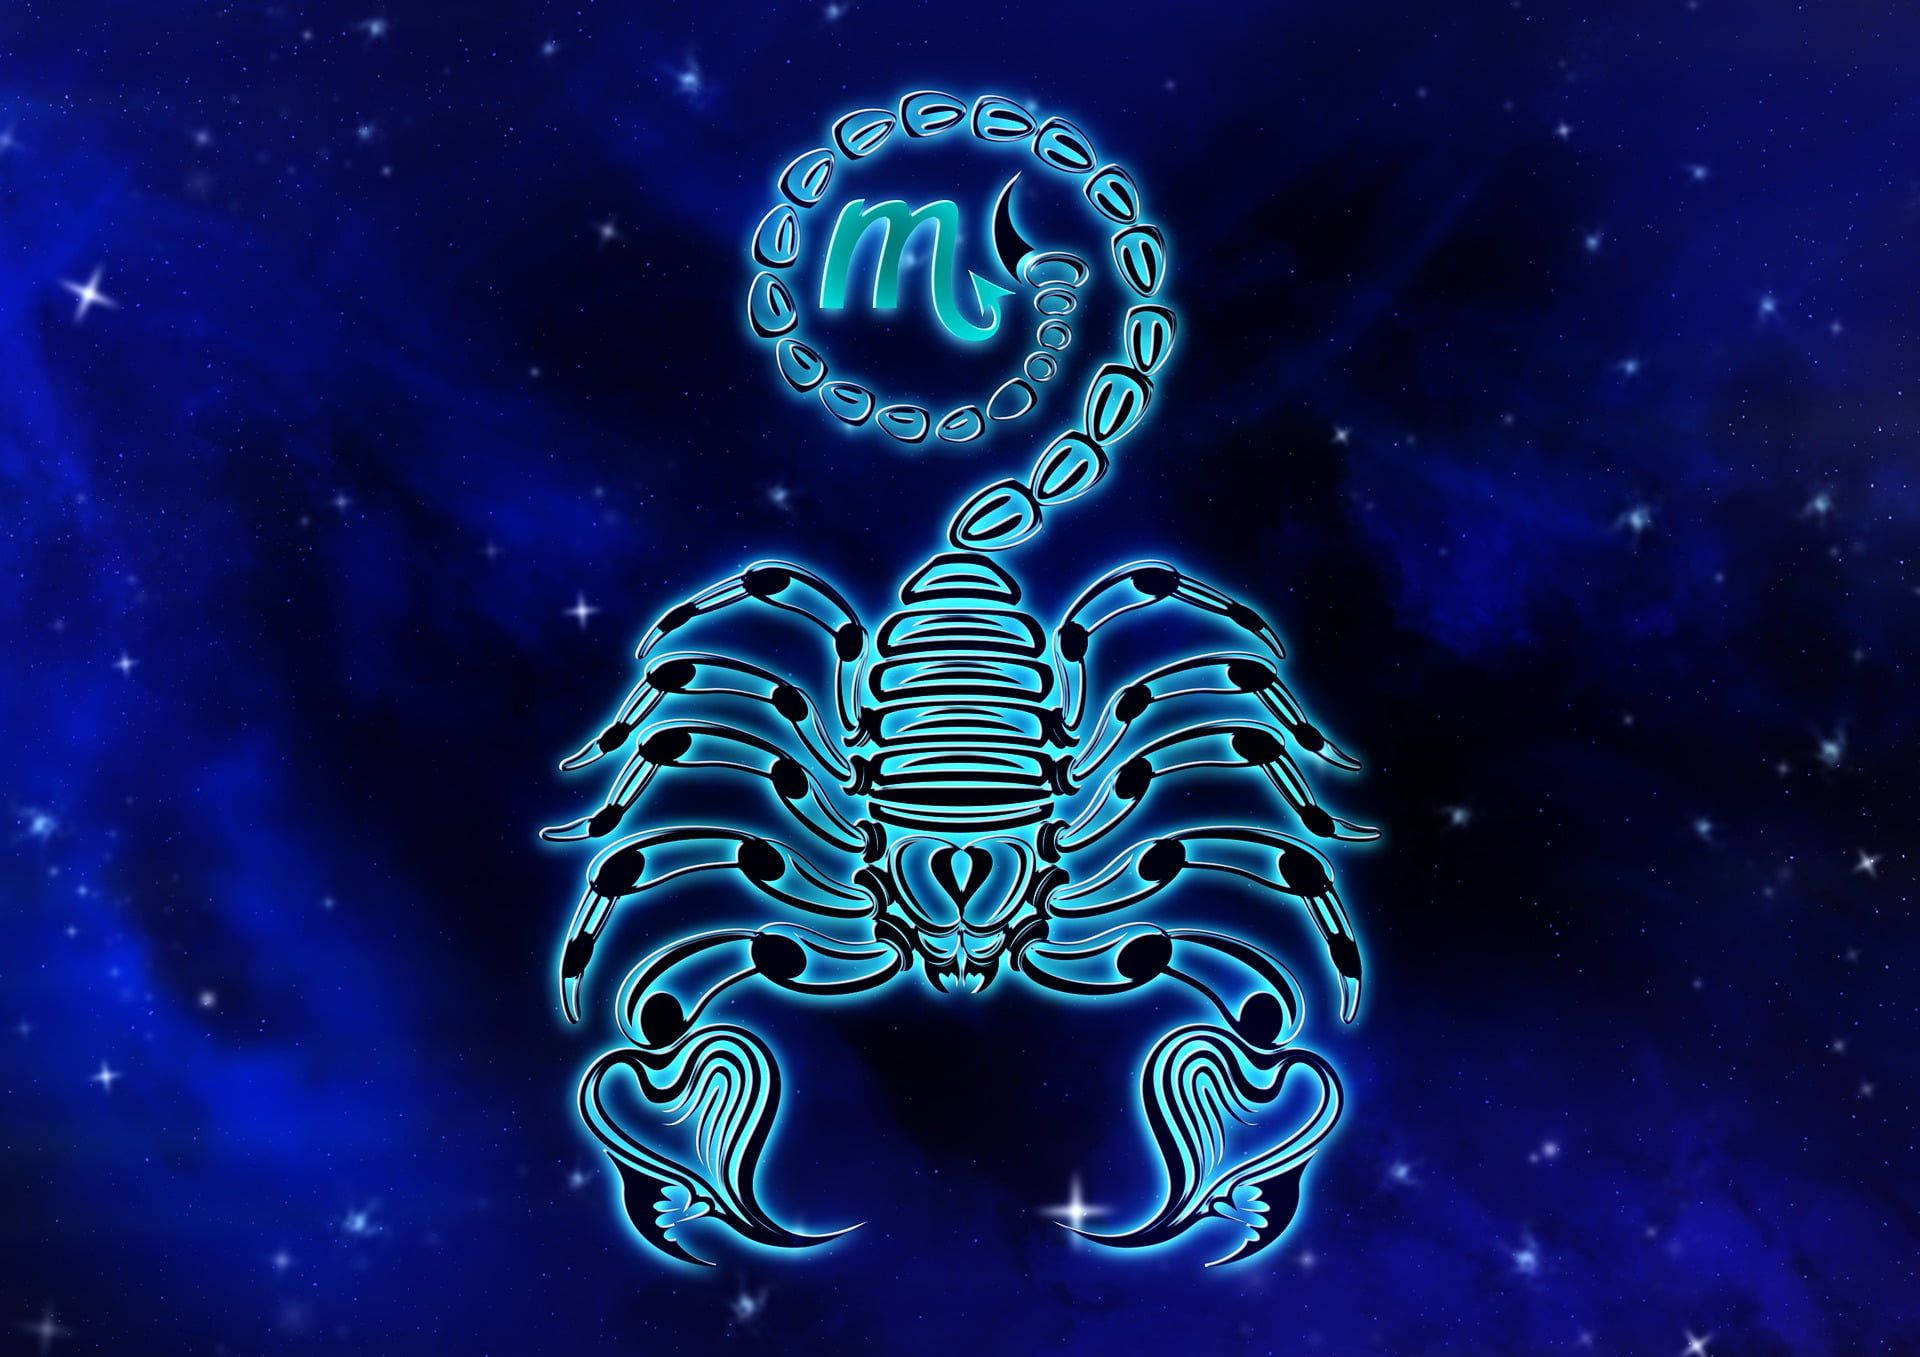 Horoscope Sign Of Scorpio Background